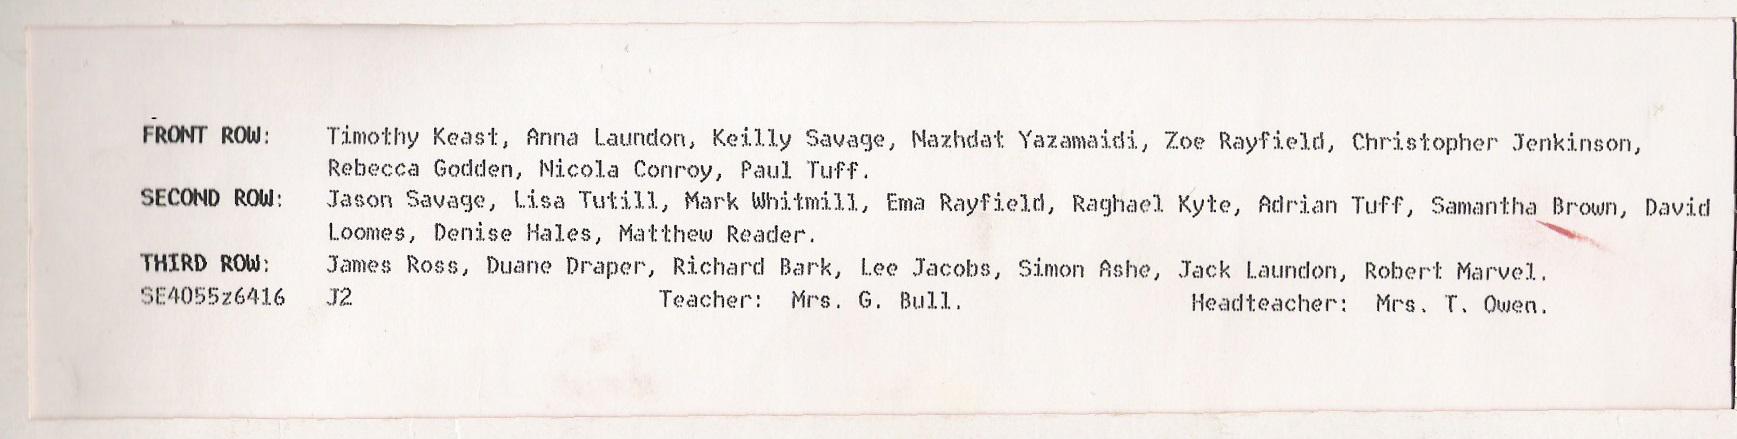 1988 - Bredhurst School Class J2 - List of Names